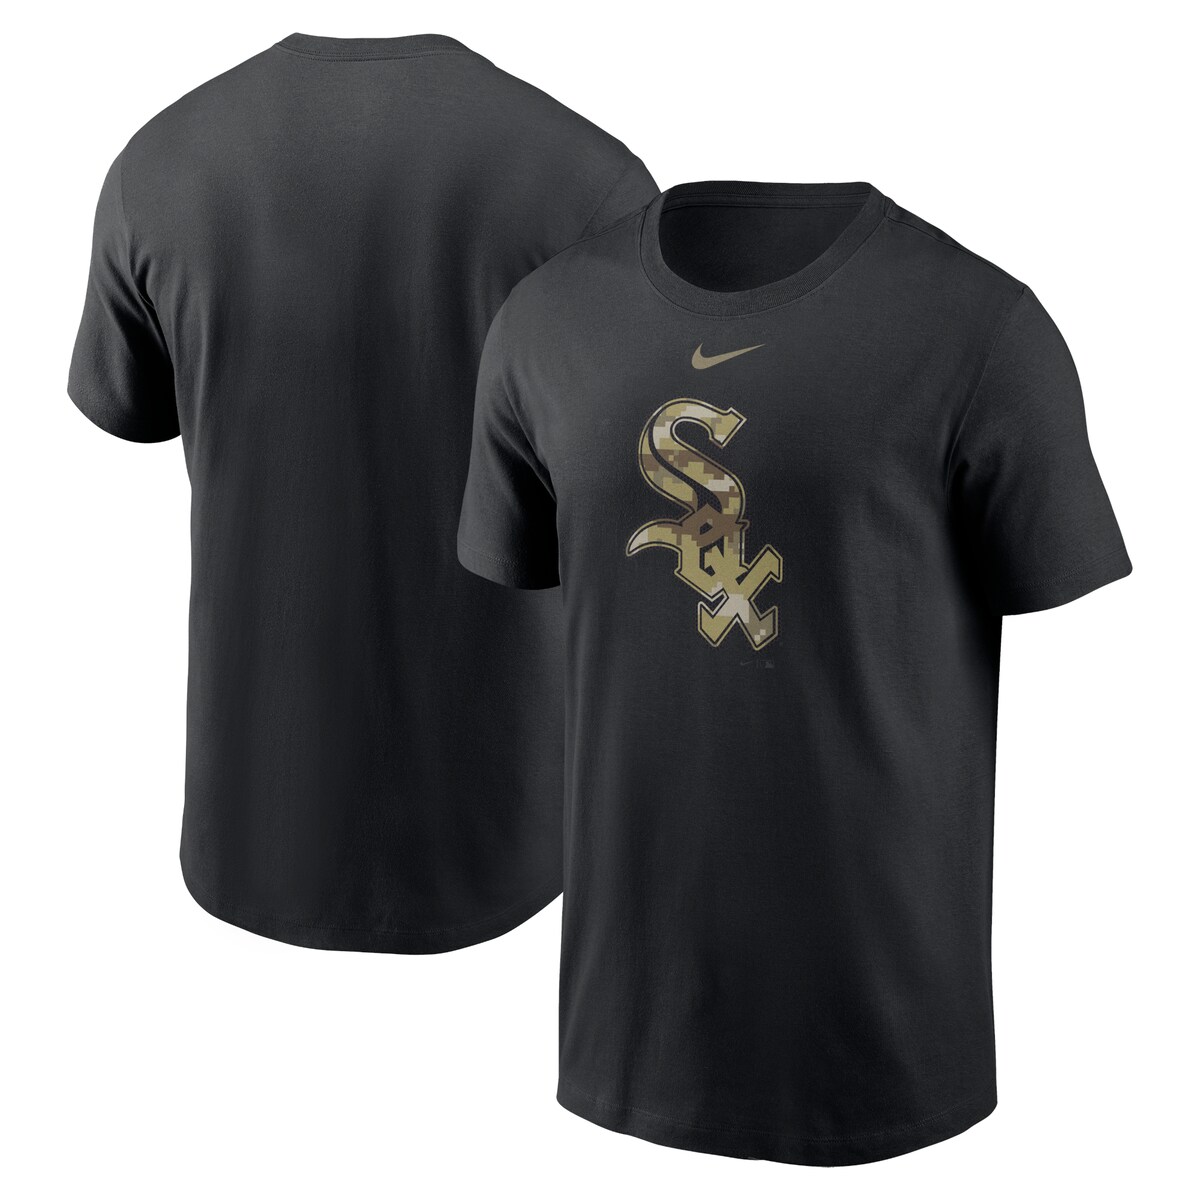 MLB zCg\bNX TVc Nike iCL Y ubN (Men's Nike Camo Logo Short Sleeve)